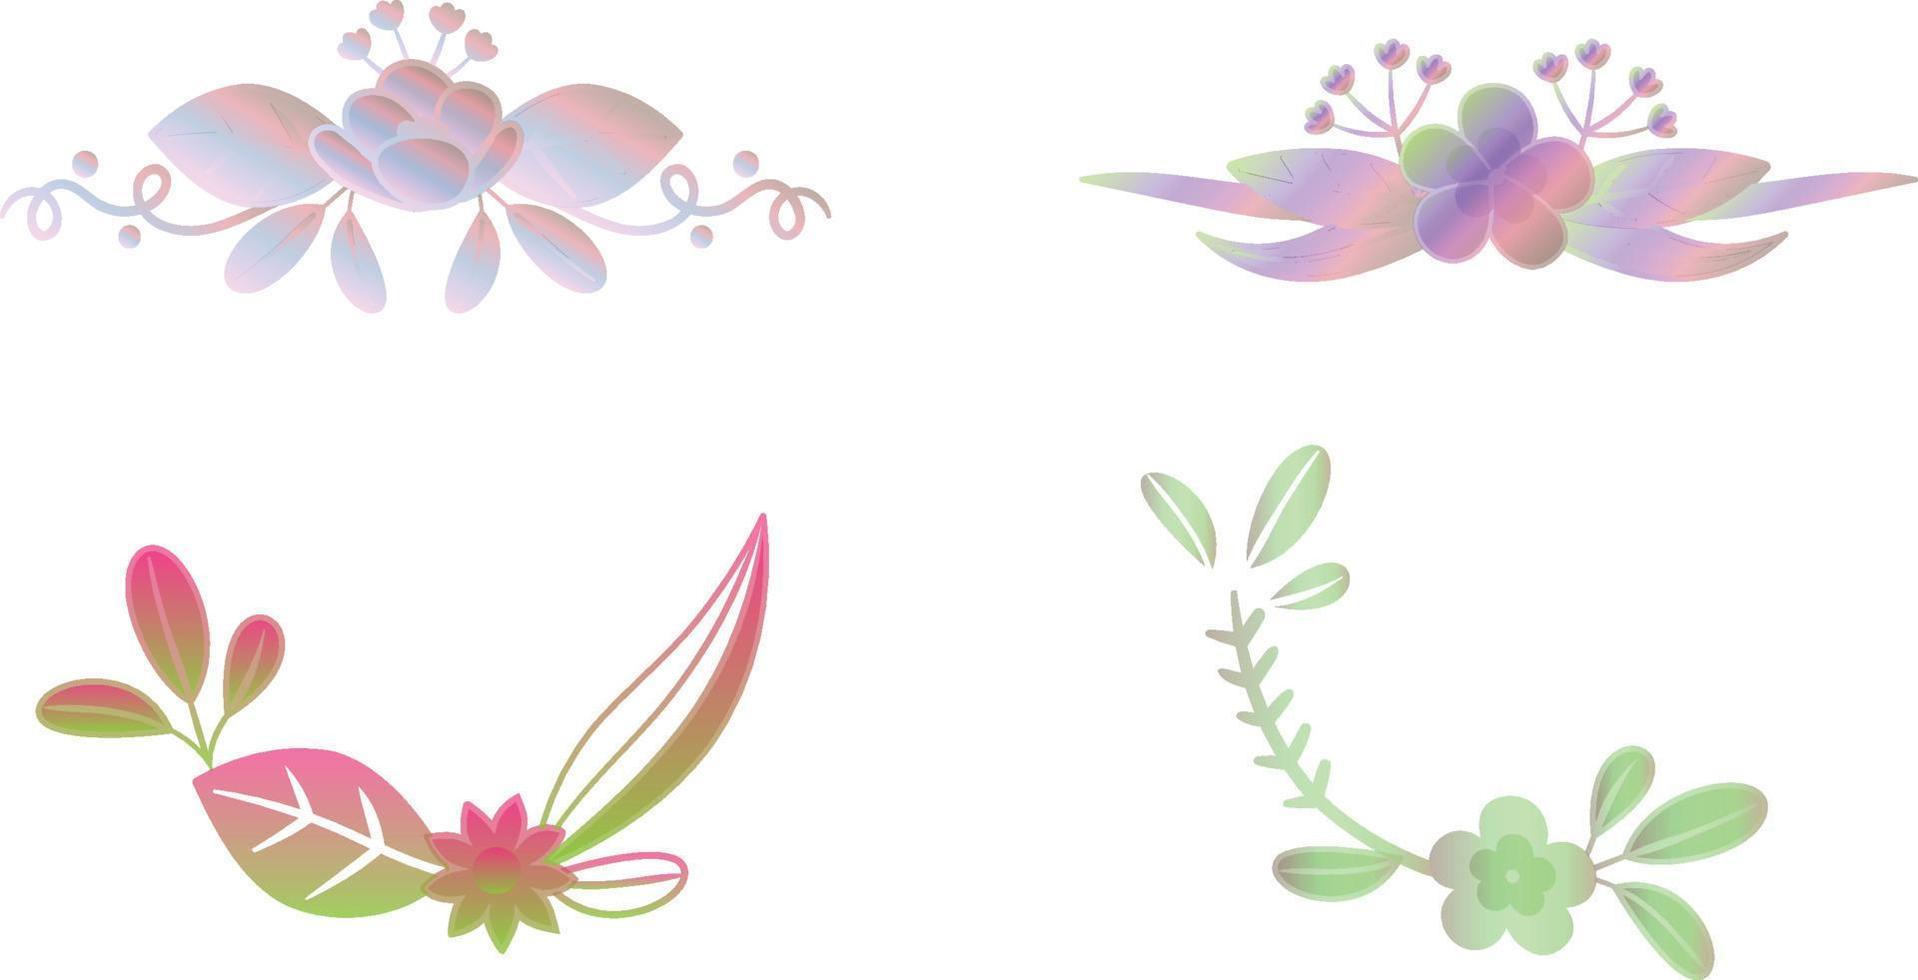 Watercolour floral wreath vector